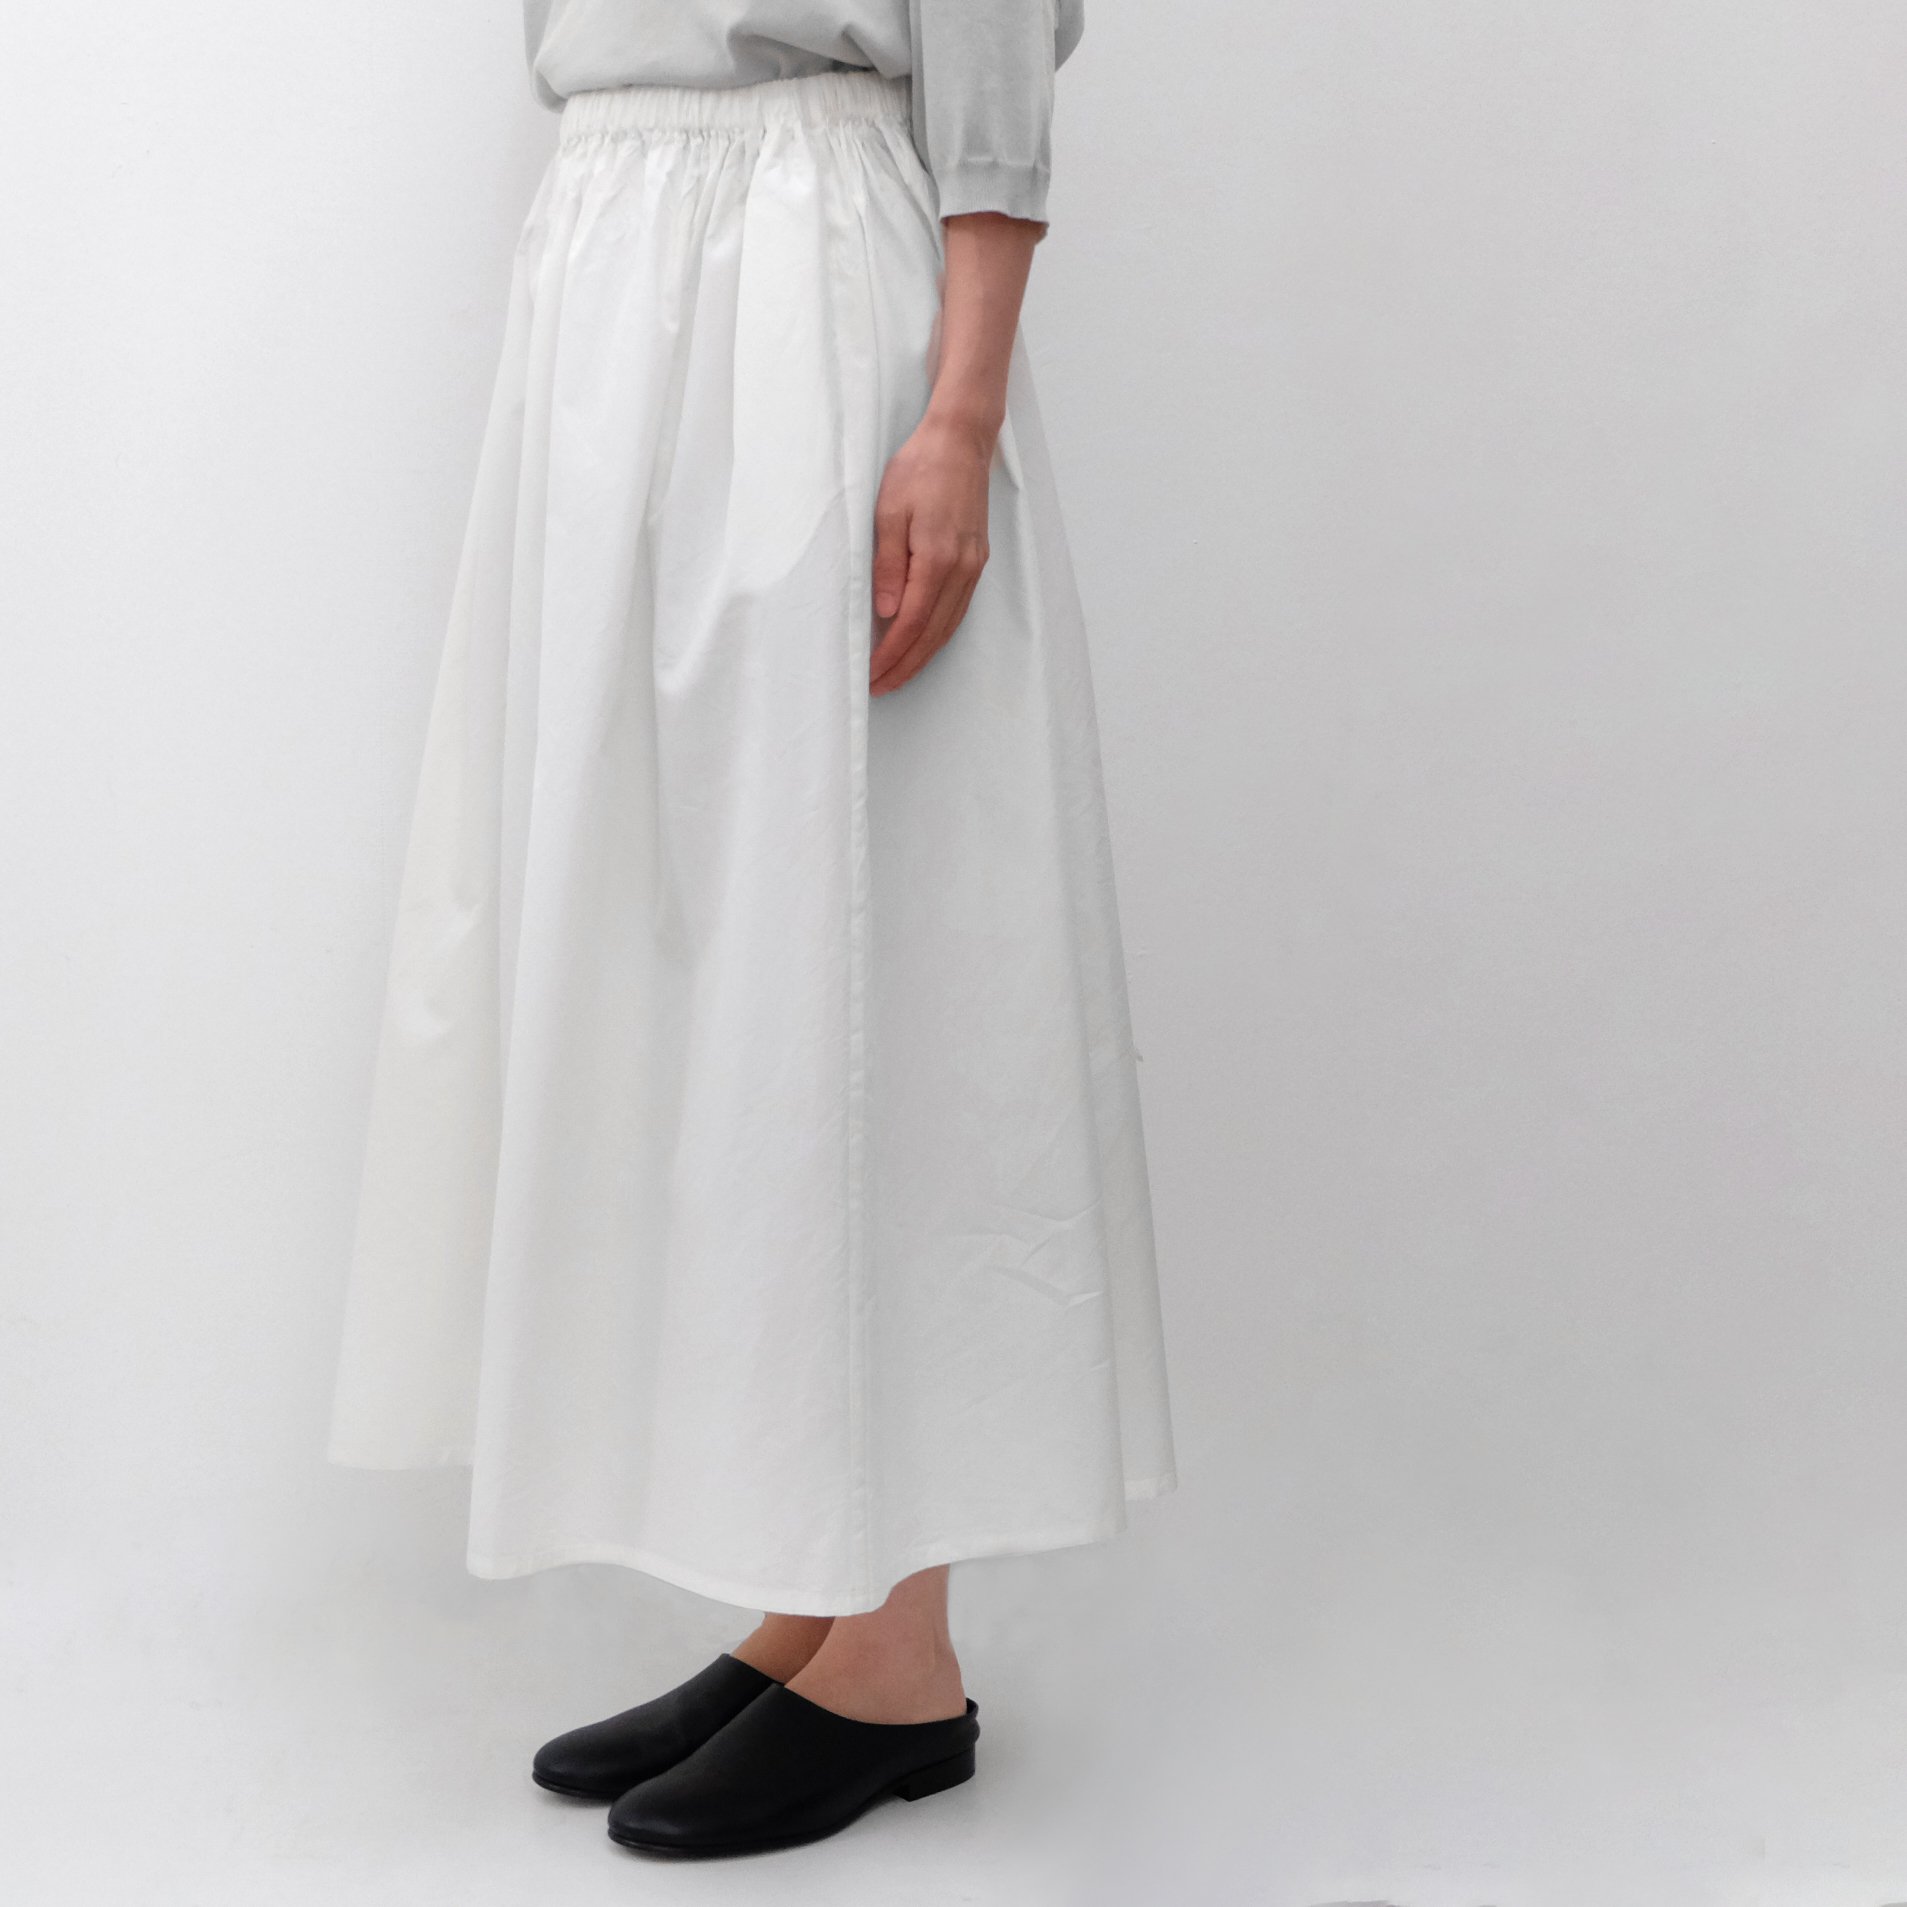 【ito fukuoka】gather skirt 《gray》作家さん